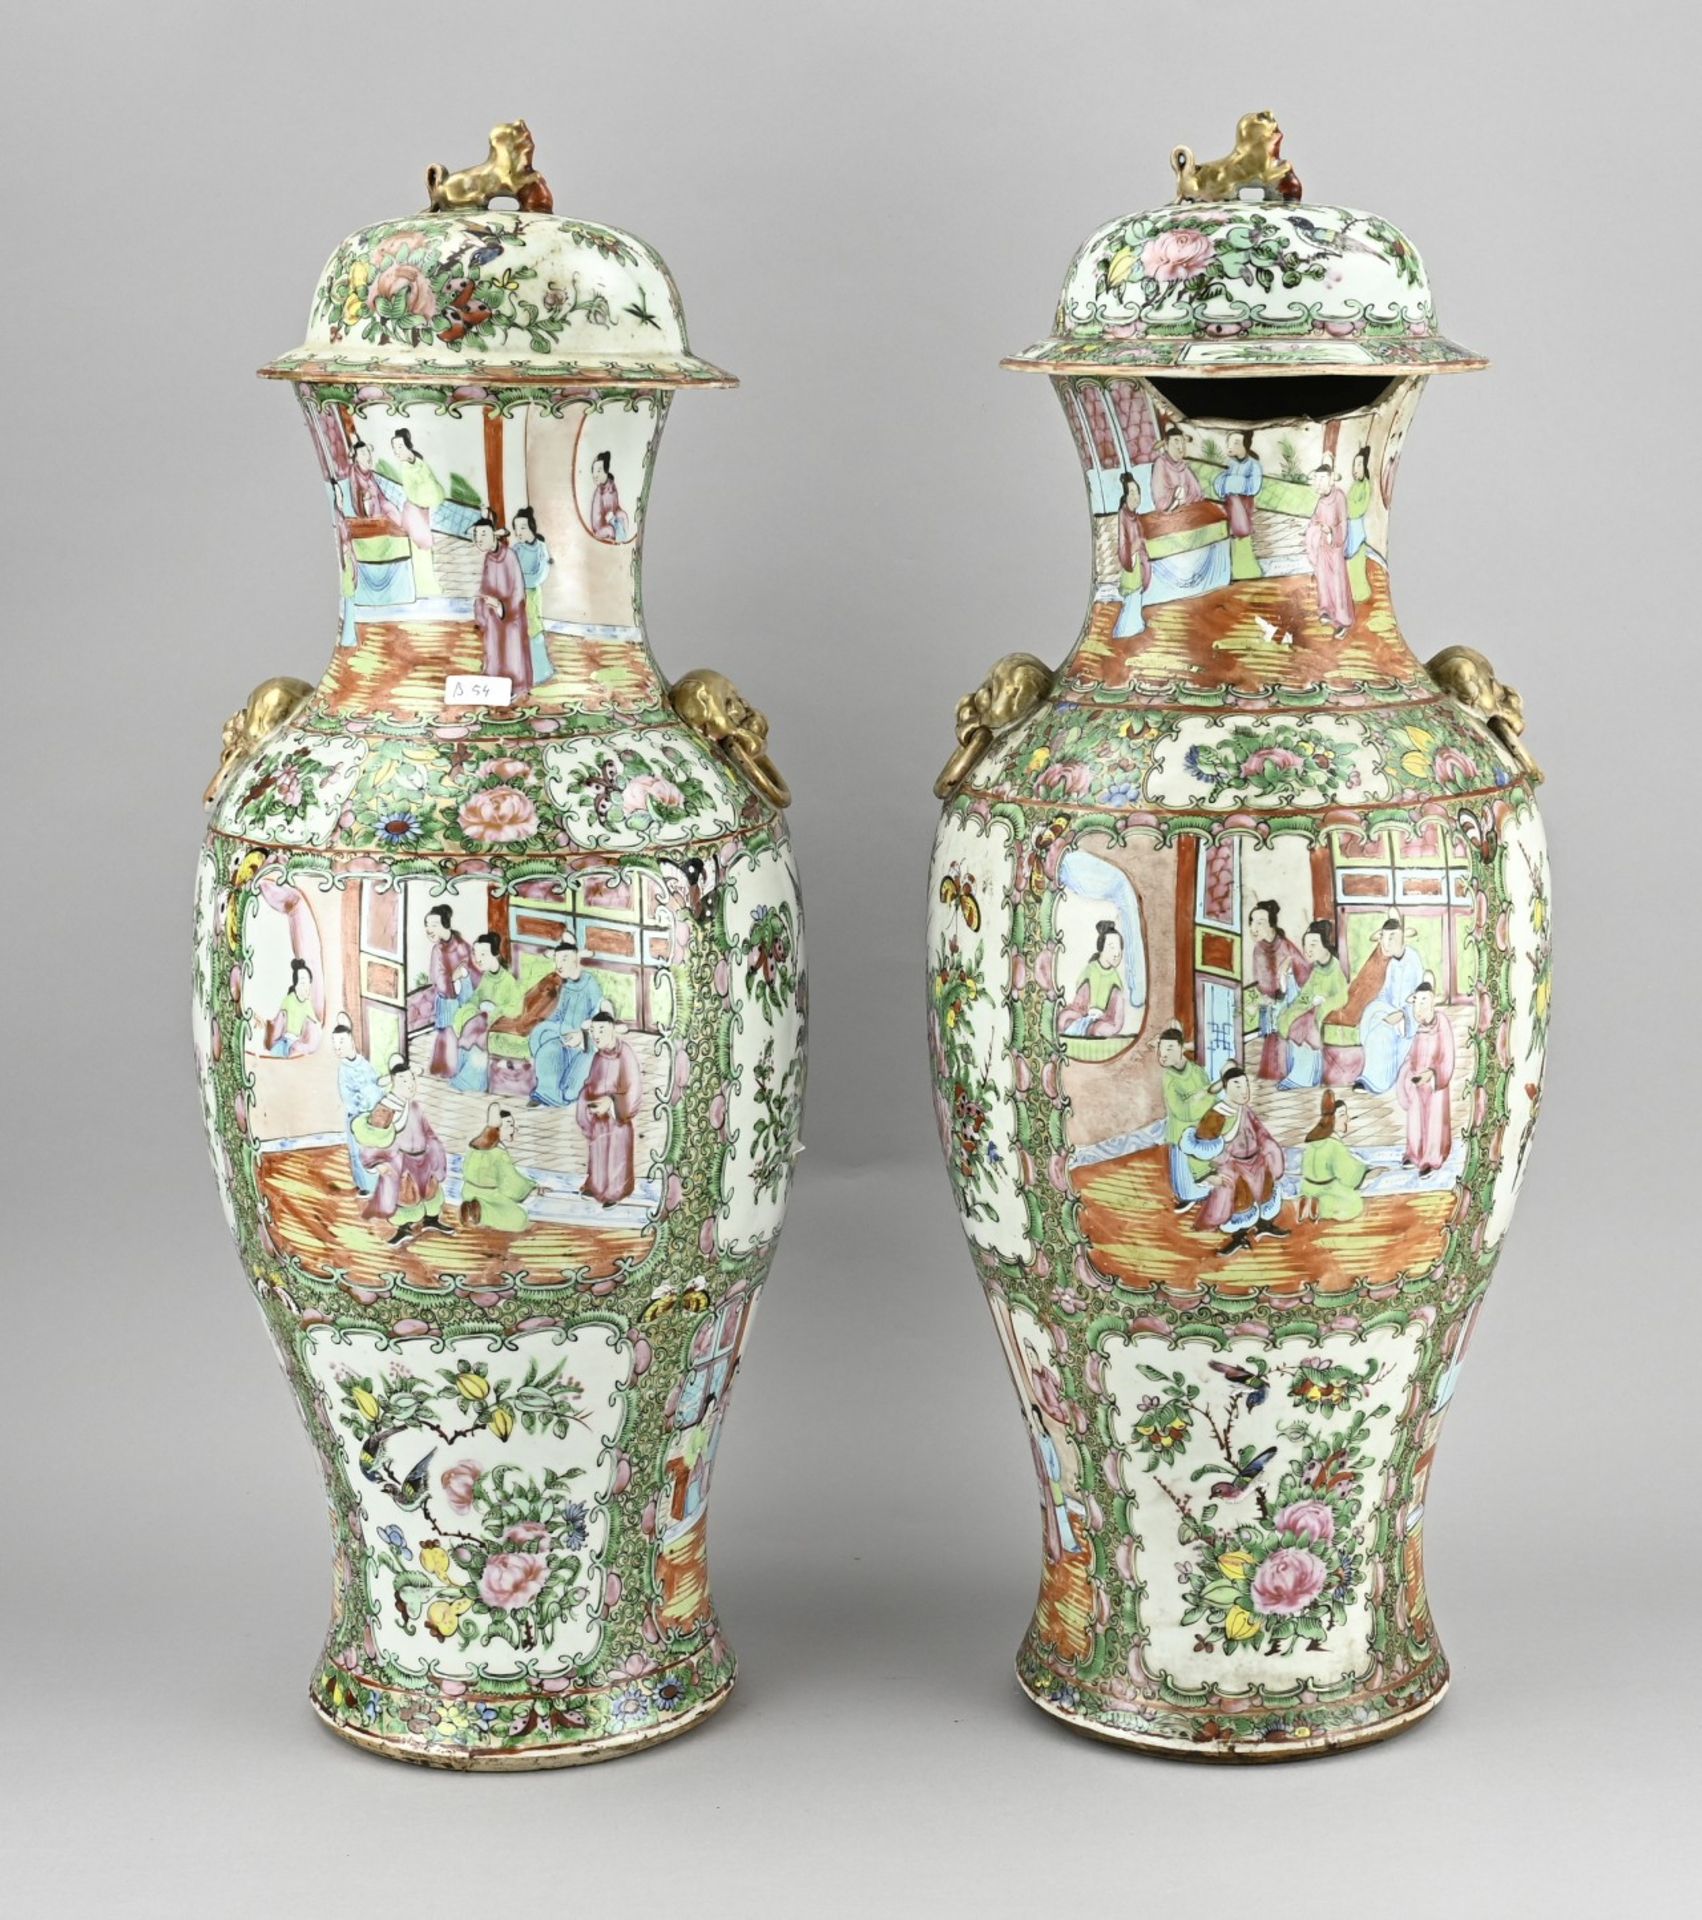 2x Chinese lidded vase, H 62 cm. - Image 2 of 2